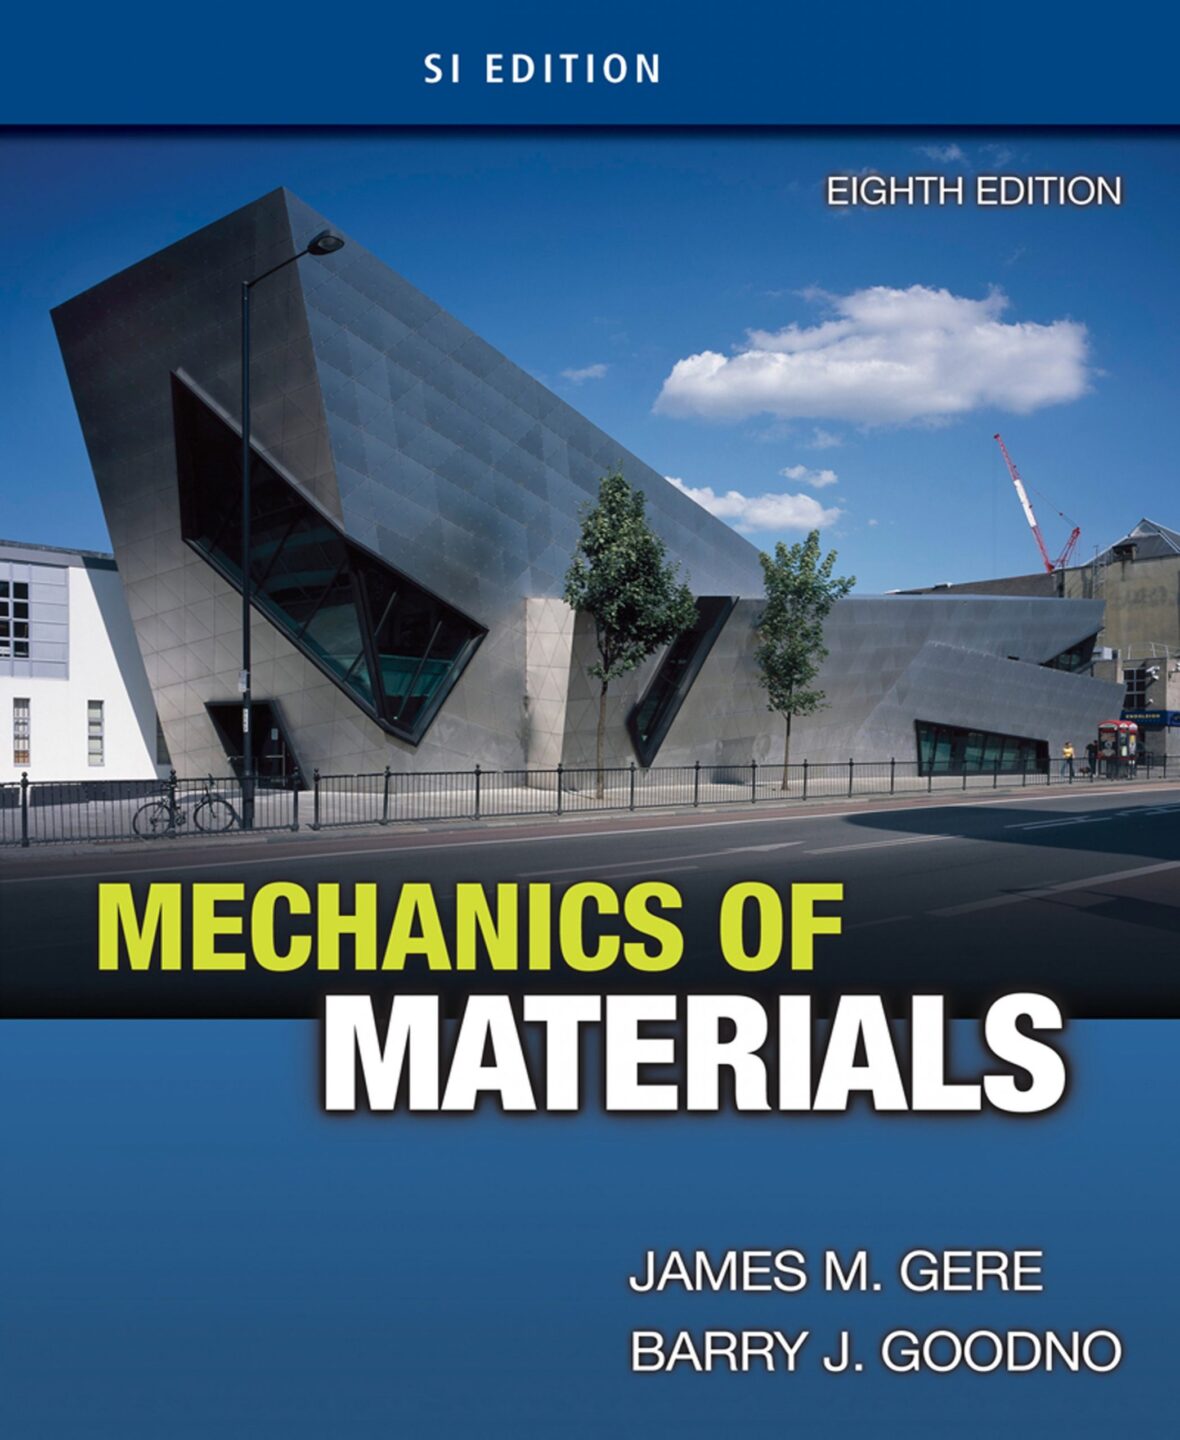 Mechanics of Matherials - James Gere & Barry J. Goodno - 8th Edition